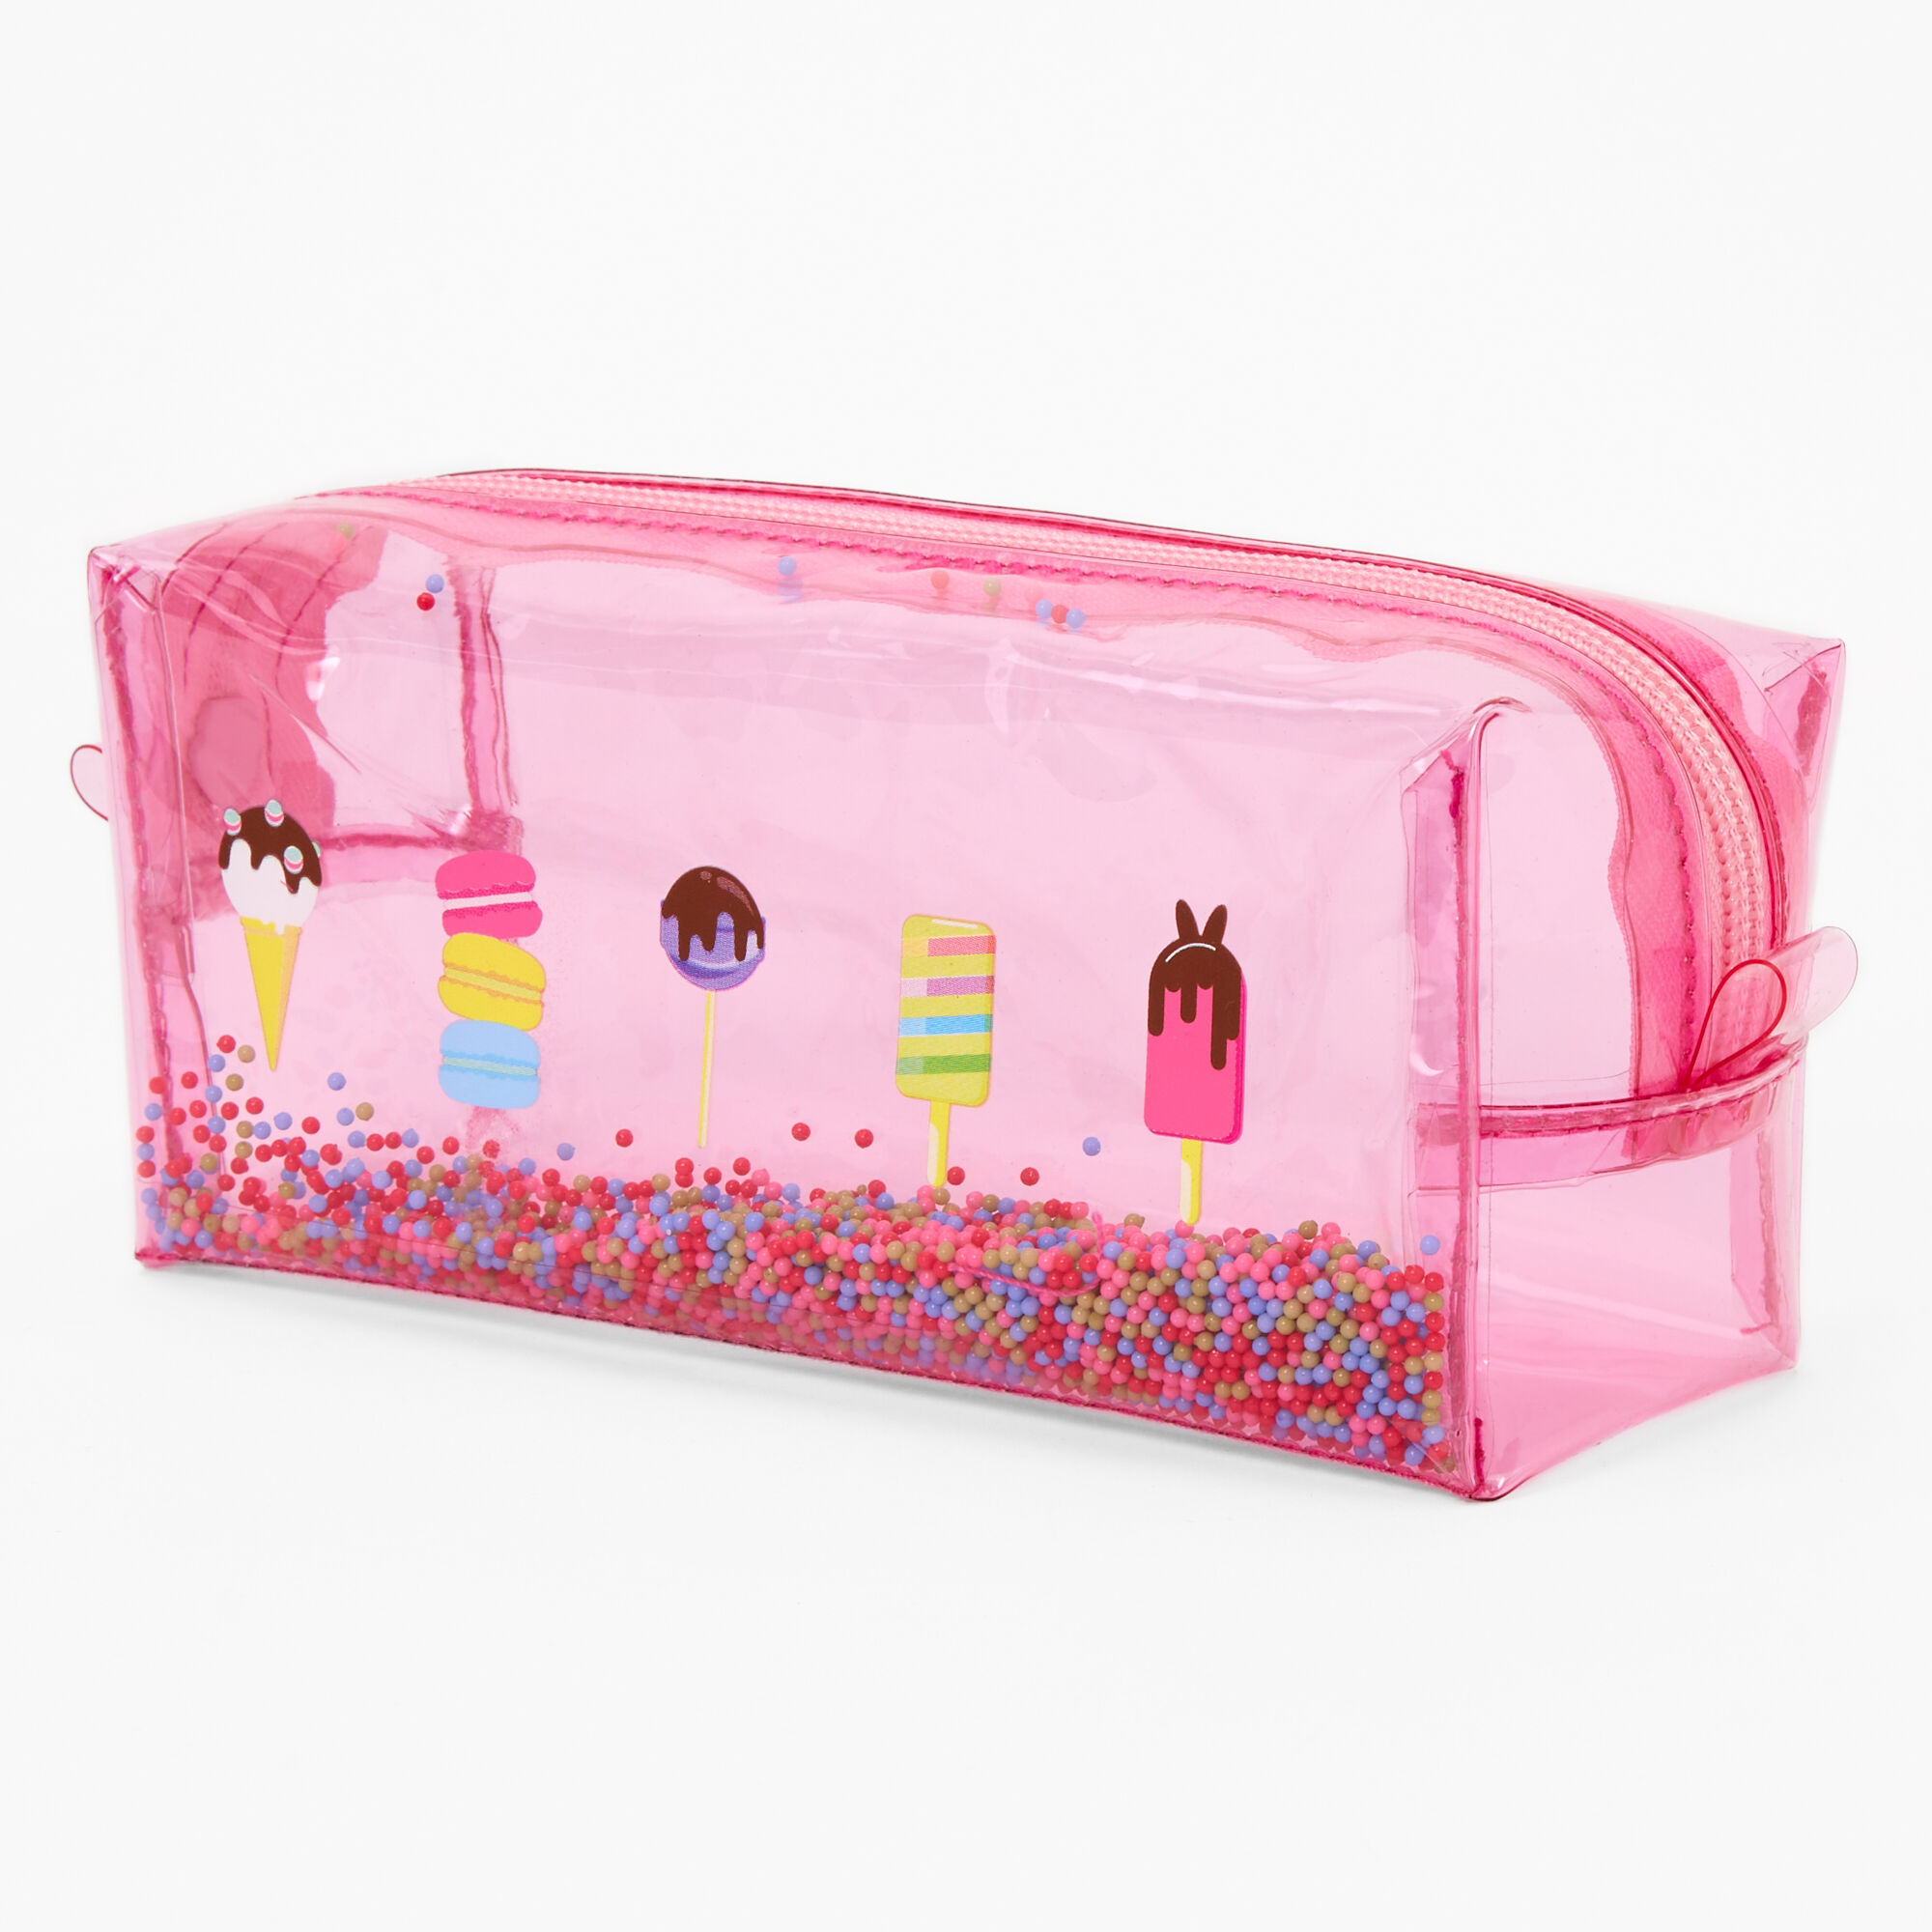 Victoria Secret Sparkle Confetti Make Up Cosmetic Bag NWT - CLEAR